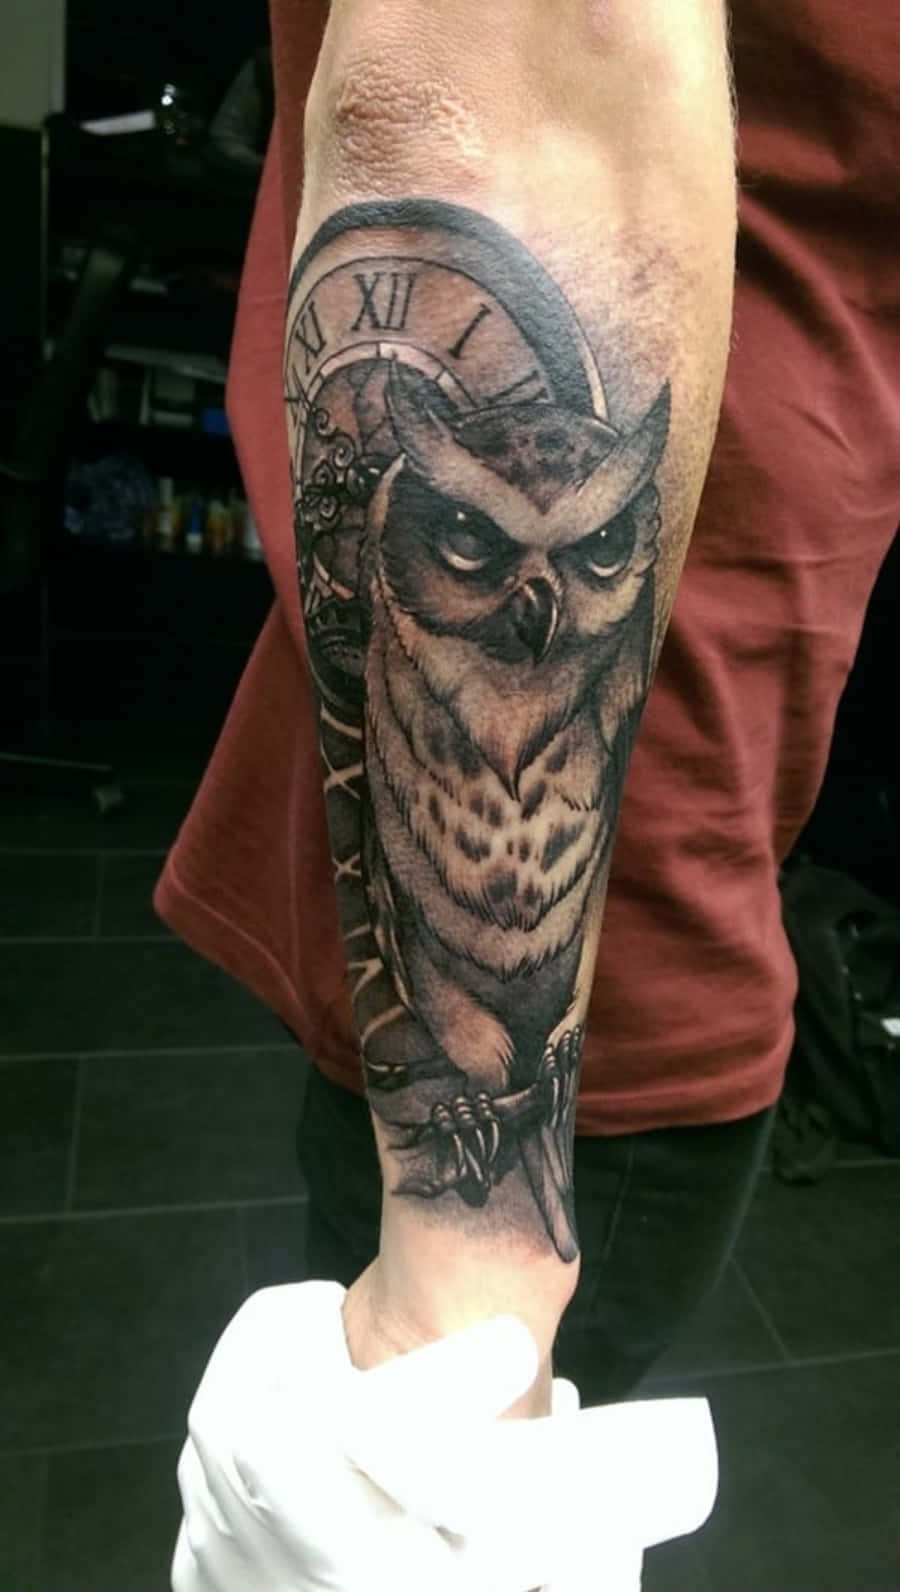 Lexica - Dark forearm tattoo owl 8k highly detailed black and grey